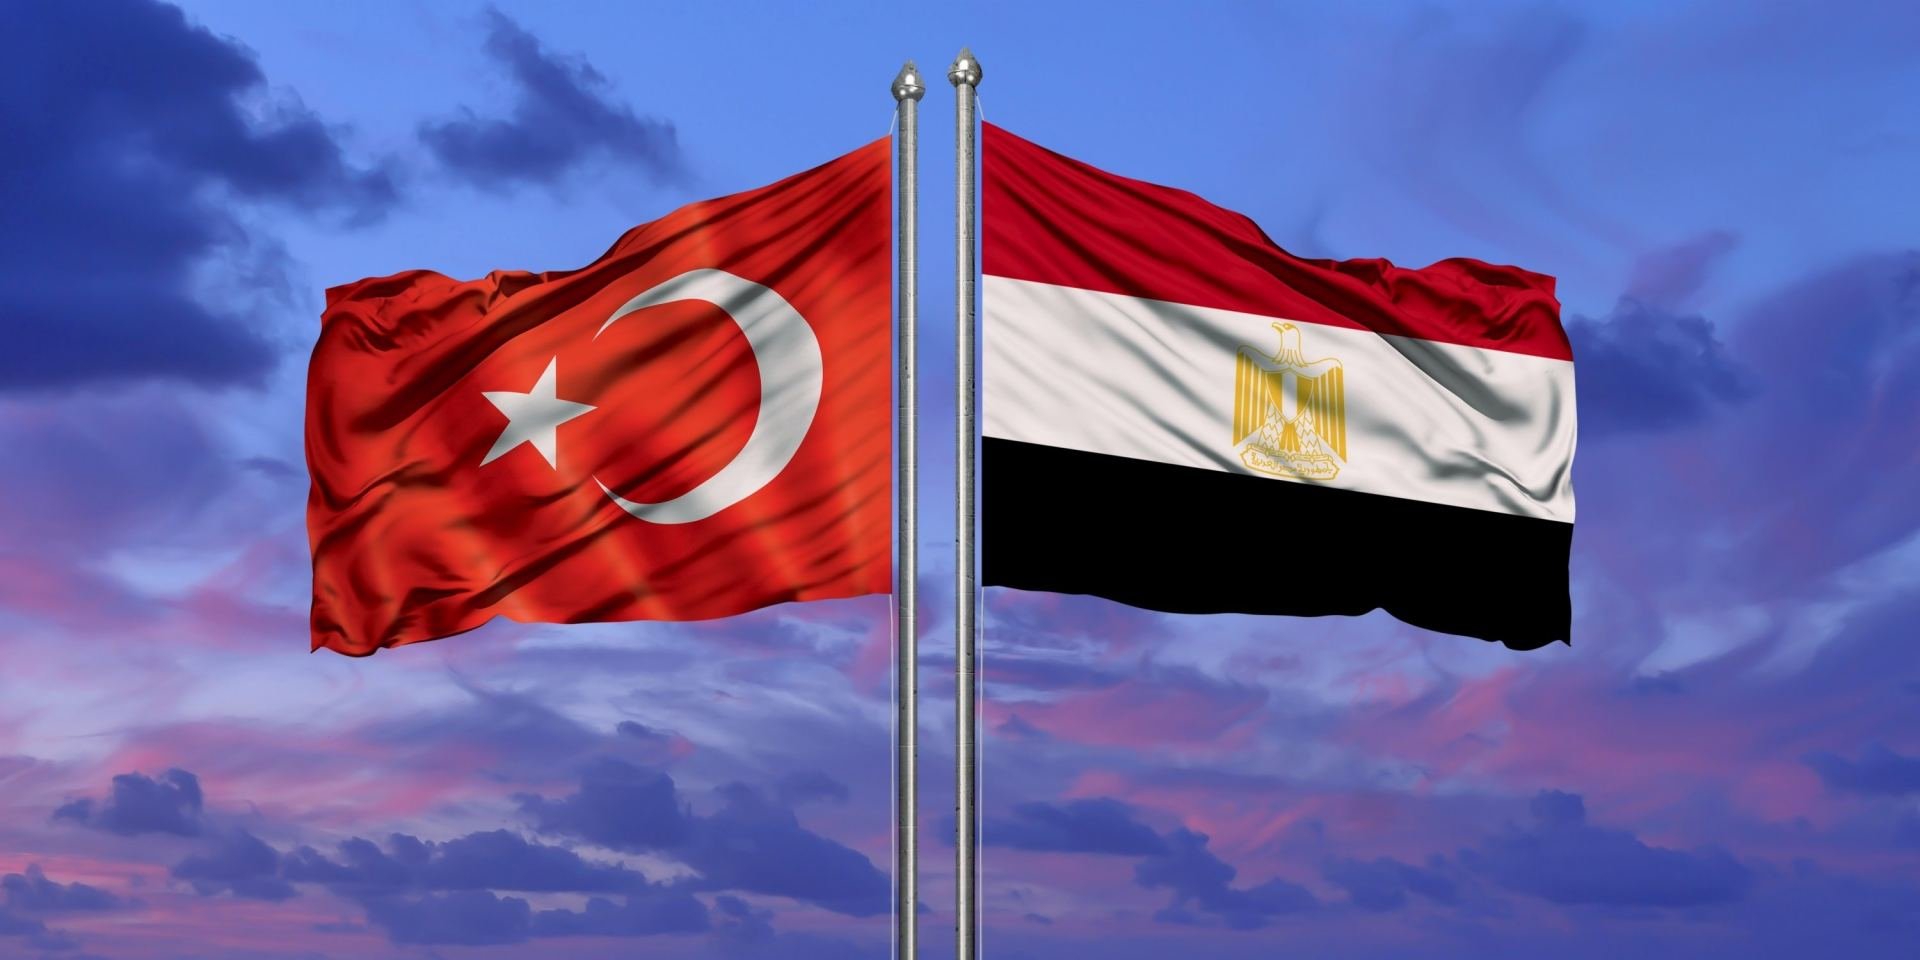 Türkiye and Egypt appoint ambassadors to restore diplomatic ties